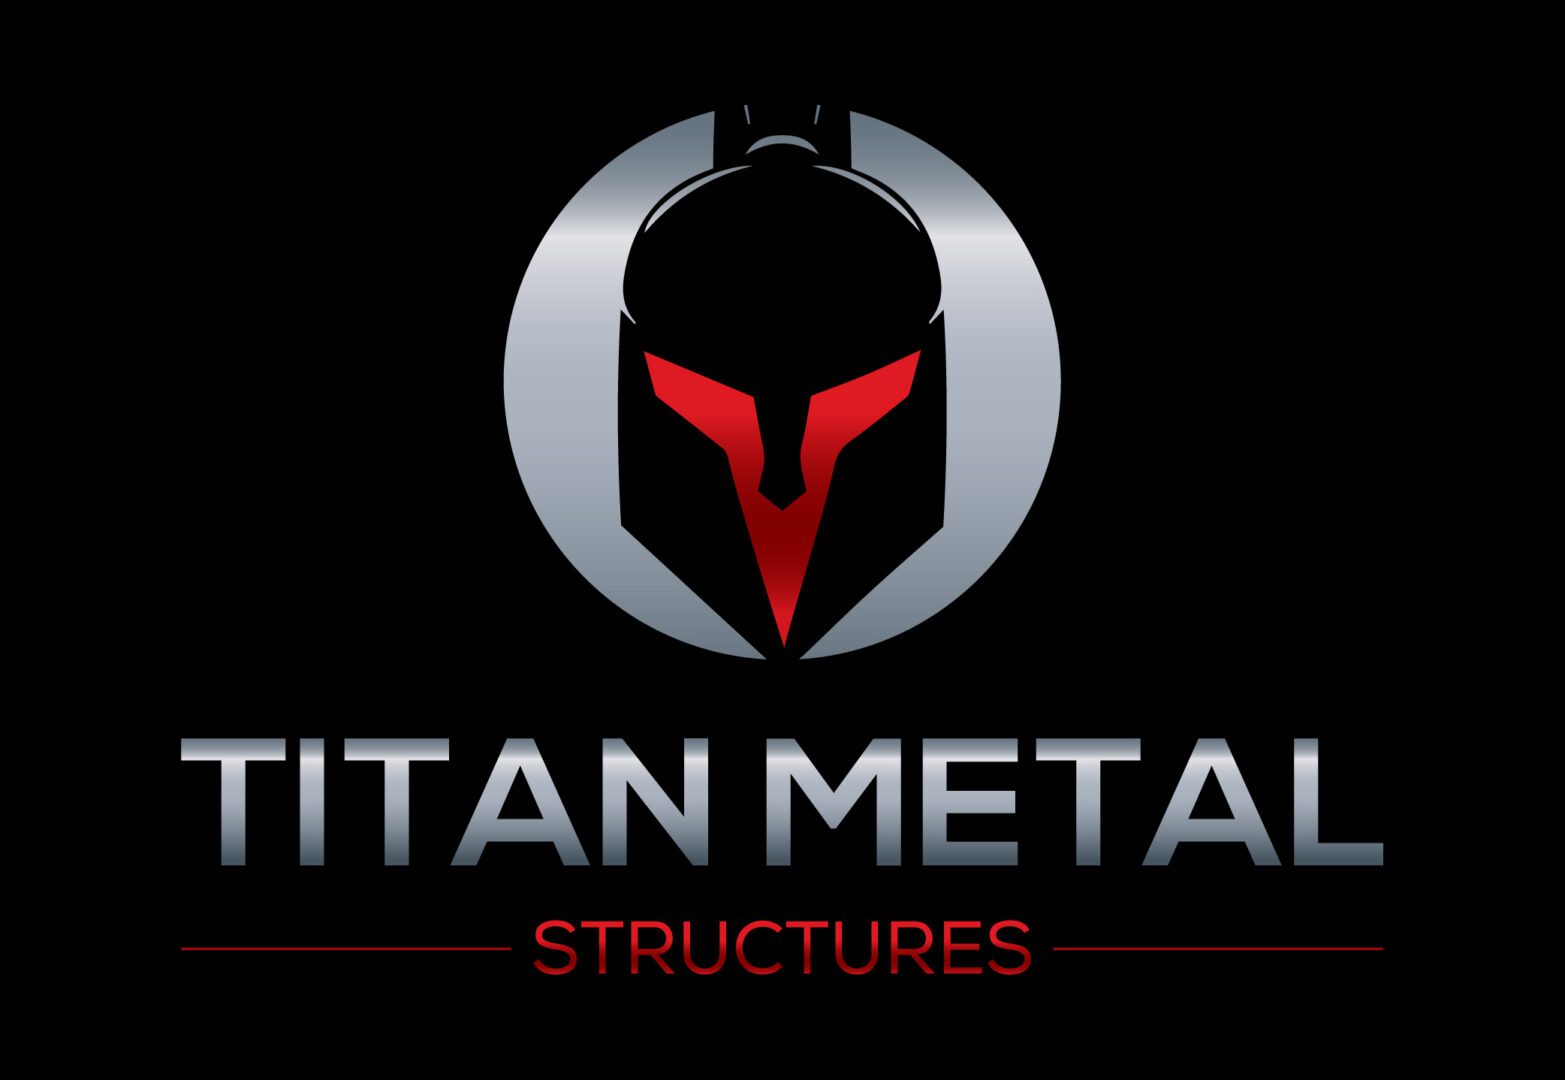 A logo of titan metal structures